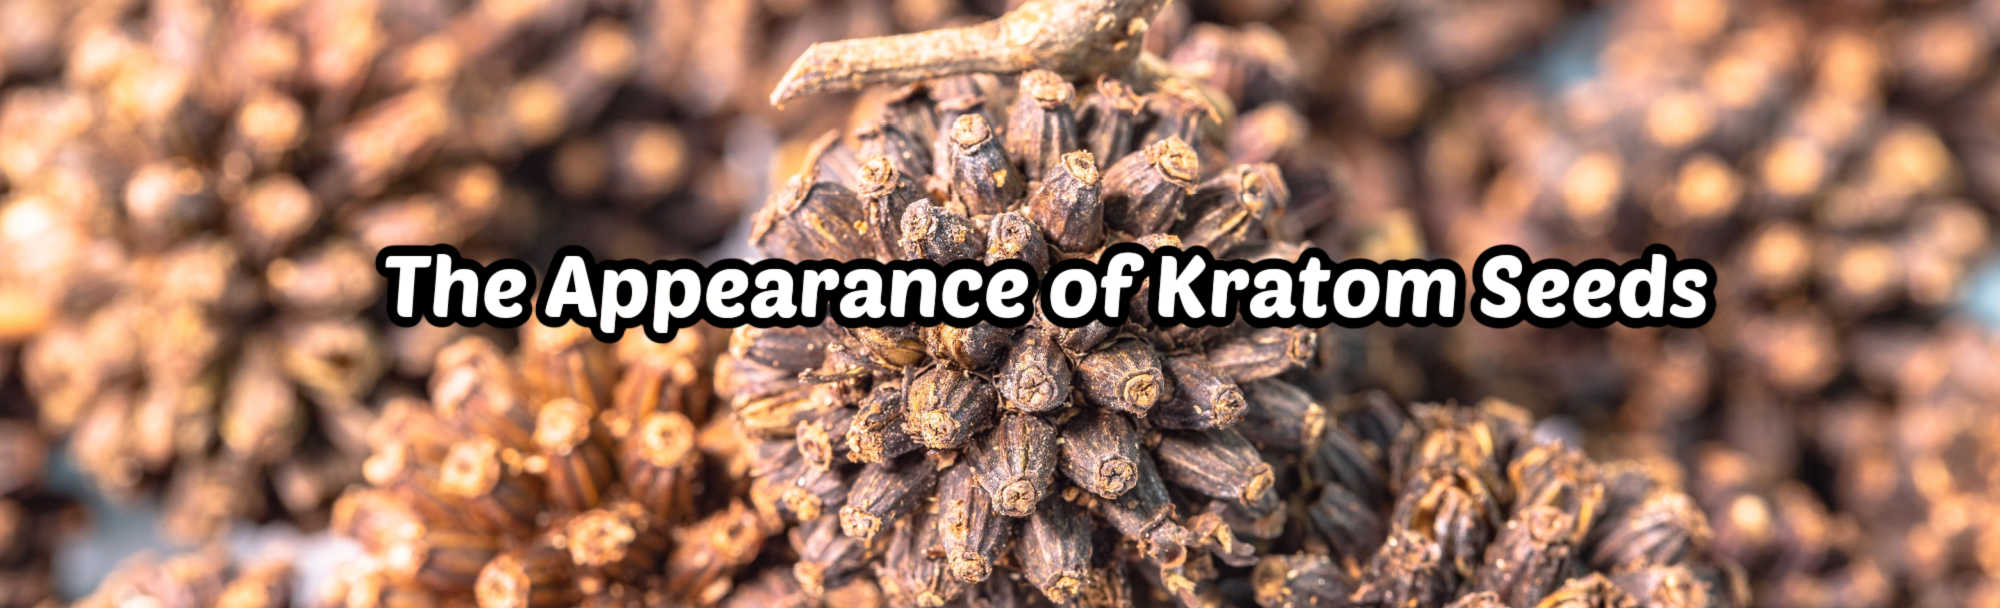 image of kratom seeds appearance